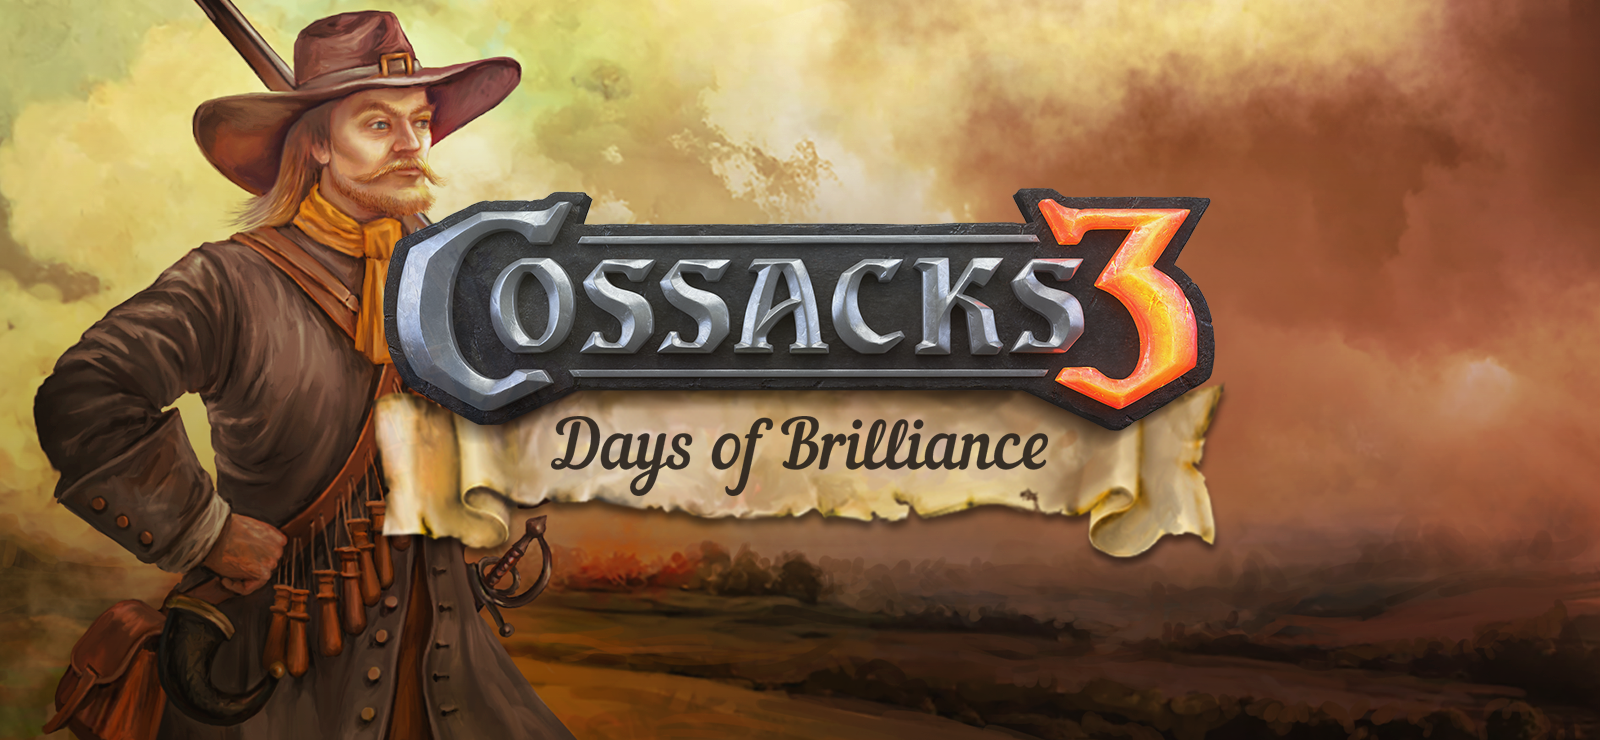 Cossacks 3: Days Of Brilliance